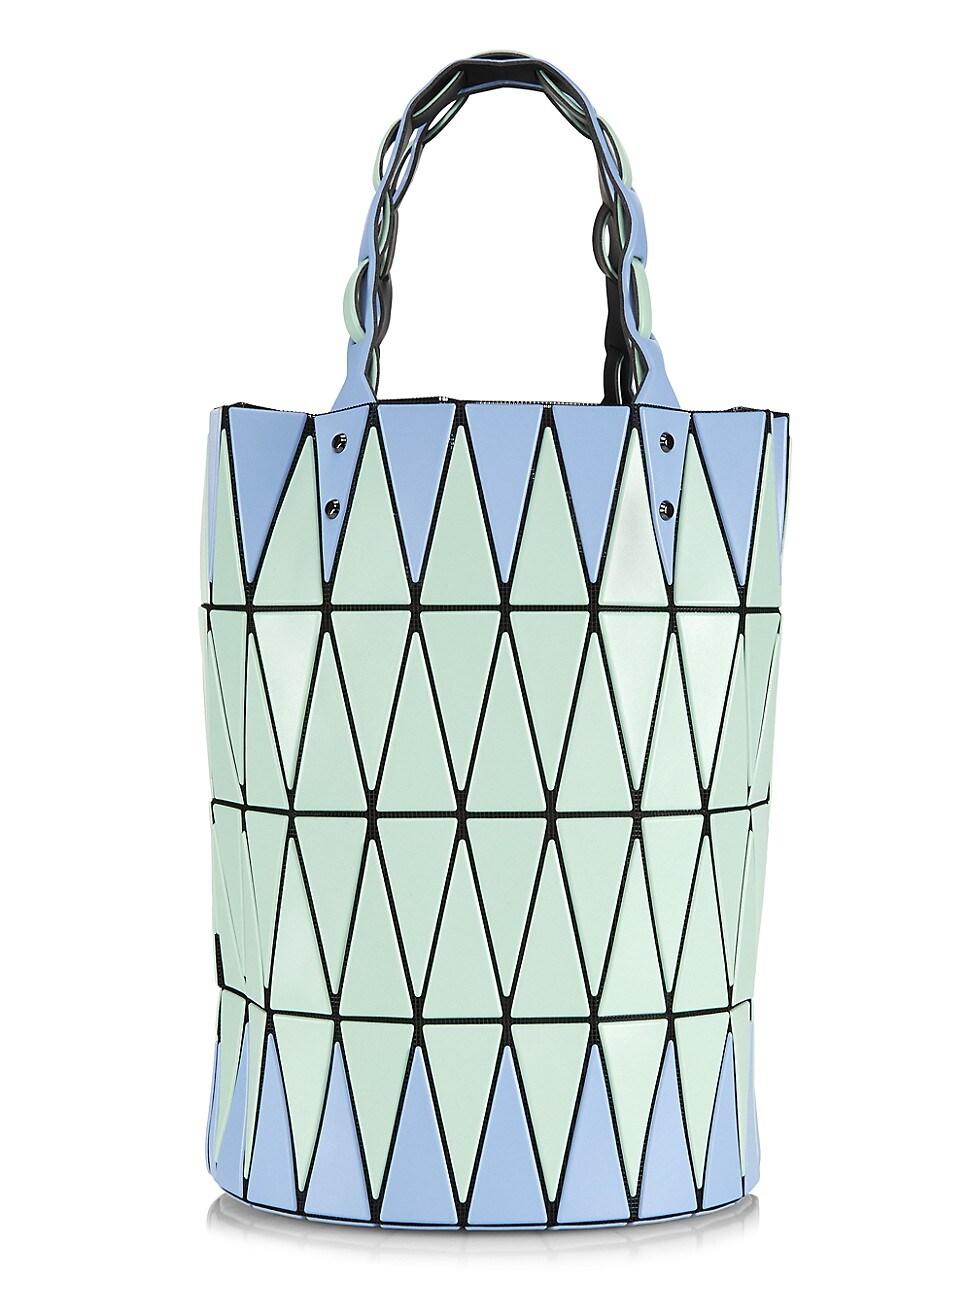 Bao Bao Issey Miyake Pvc Small Basket Bag in Blue